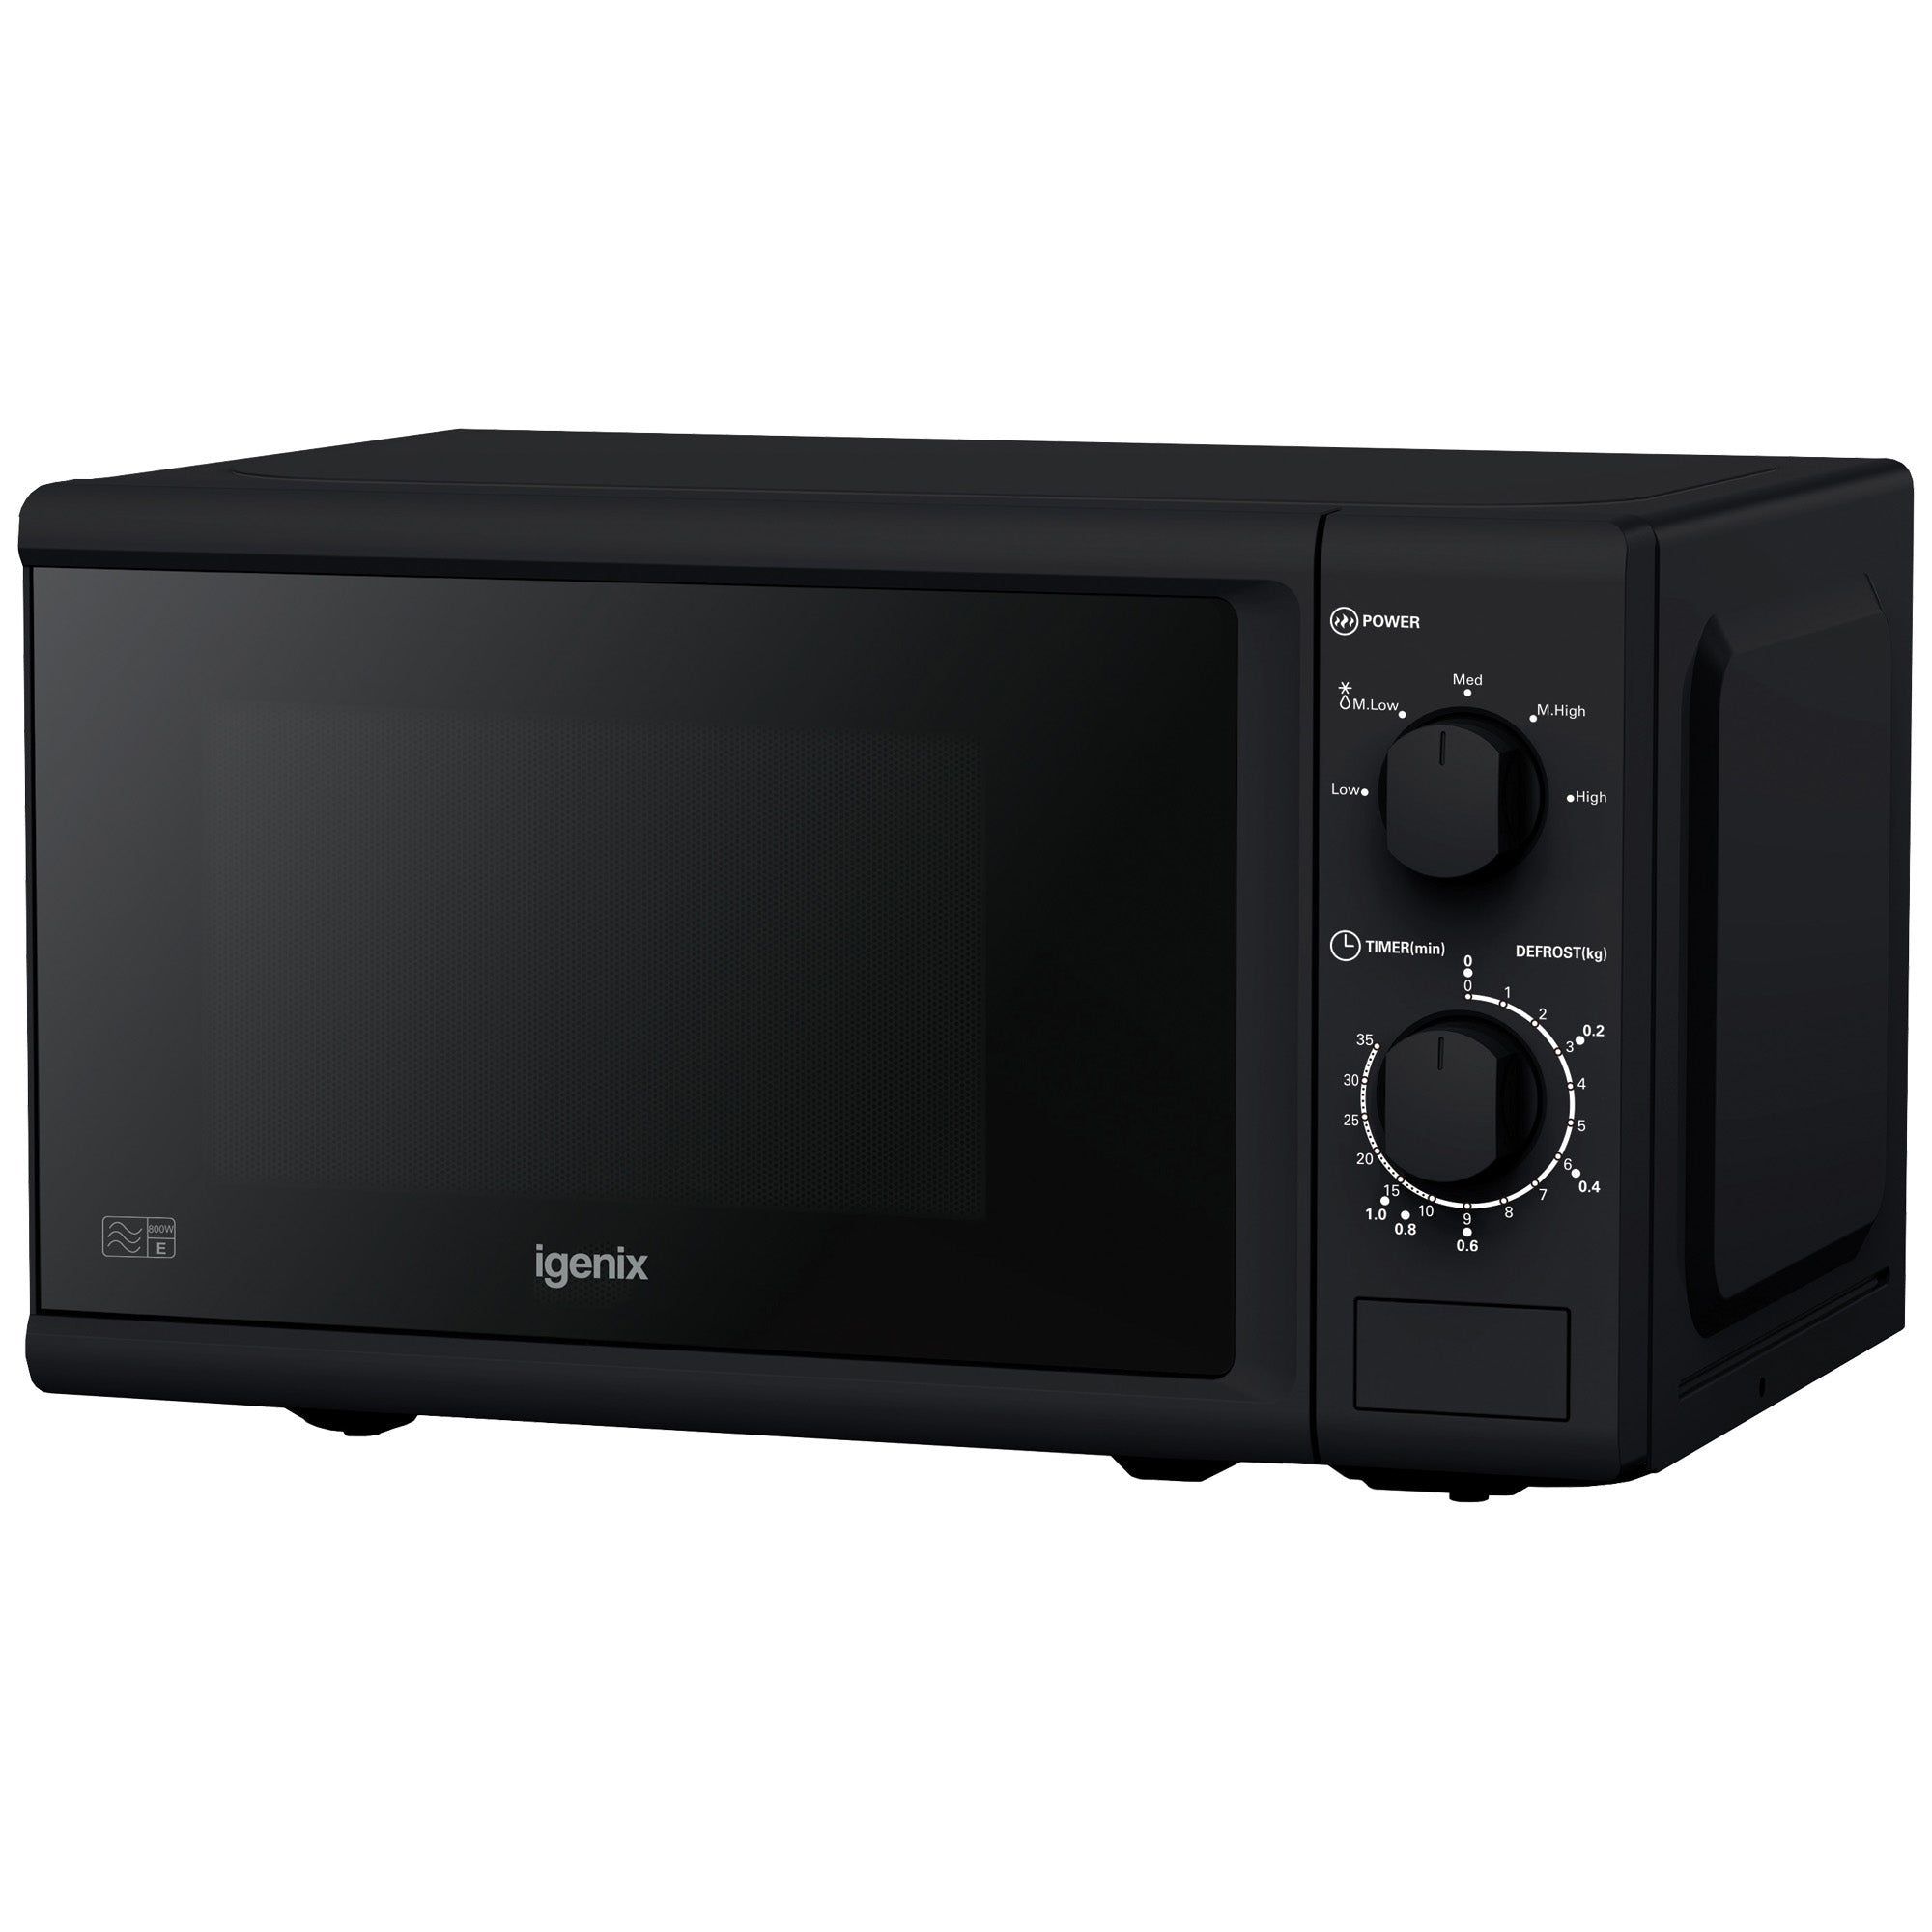 Manual Microwave, 20 Litre, 5 Power Settings, 800W, Black